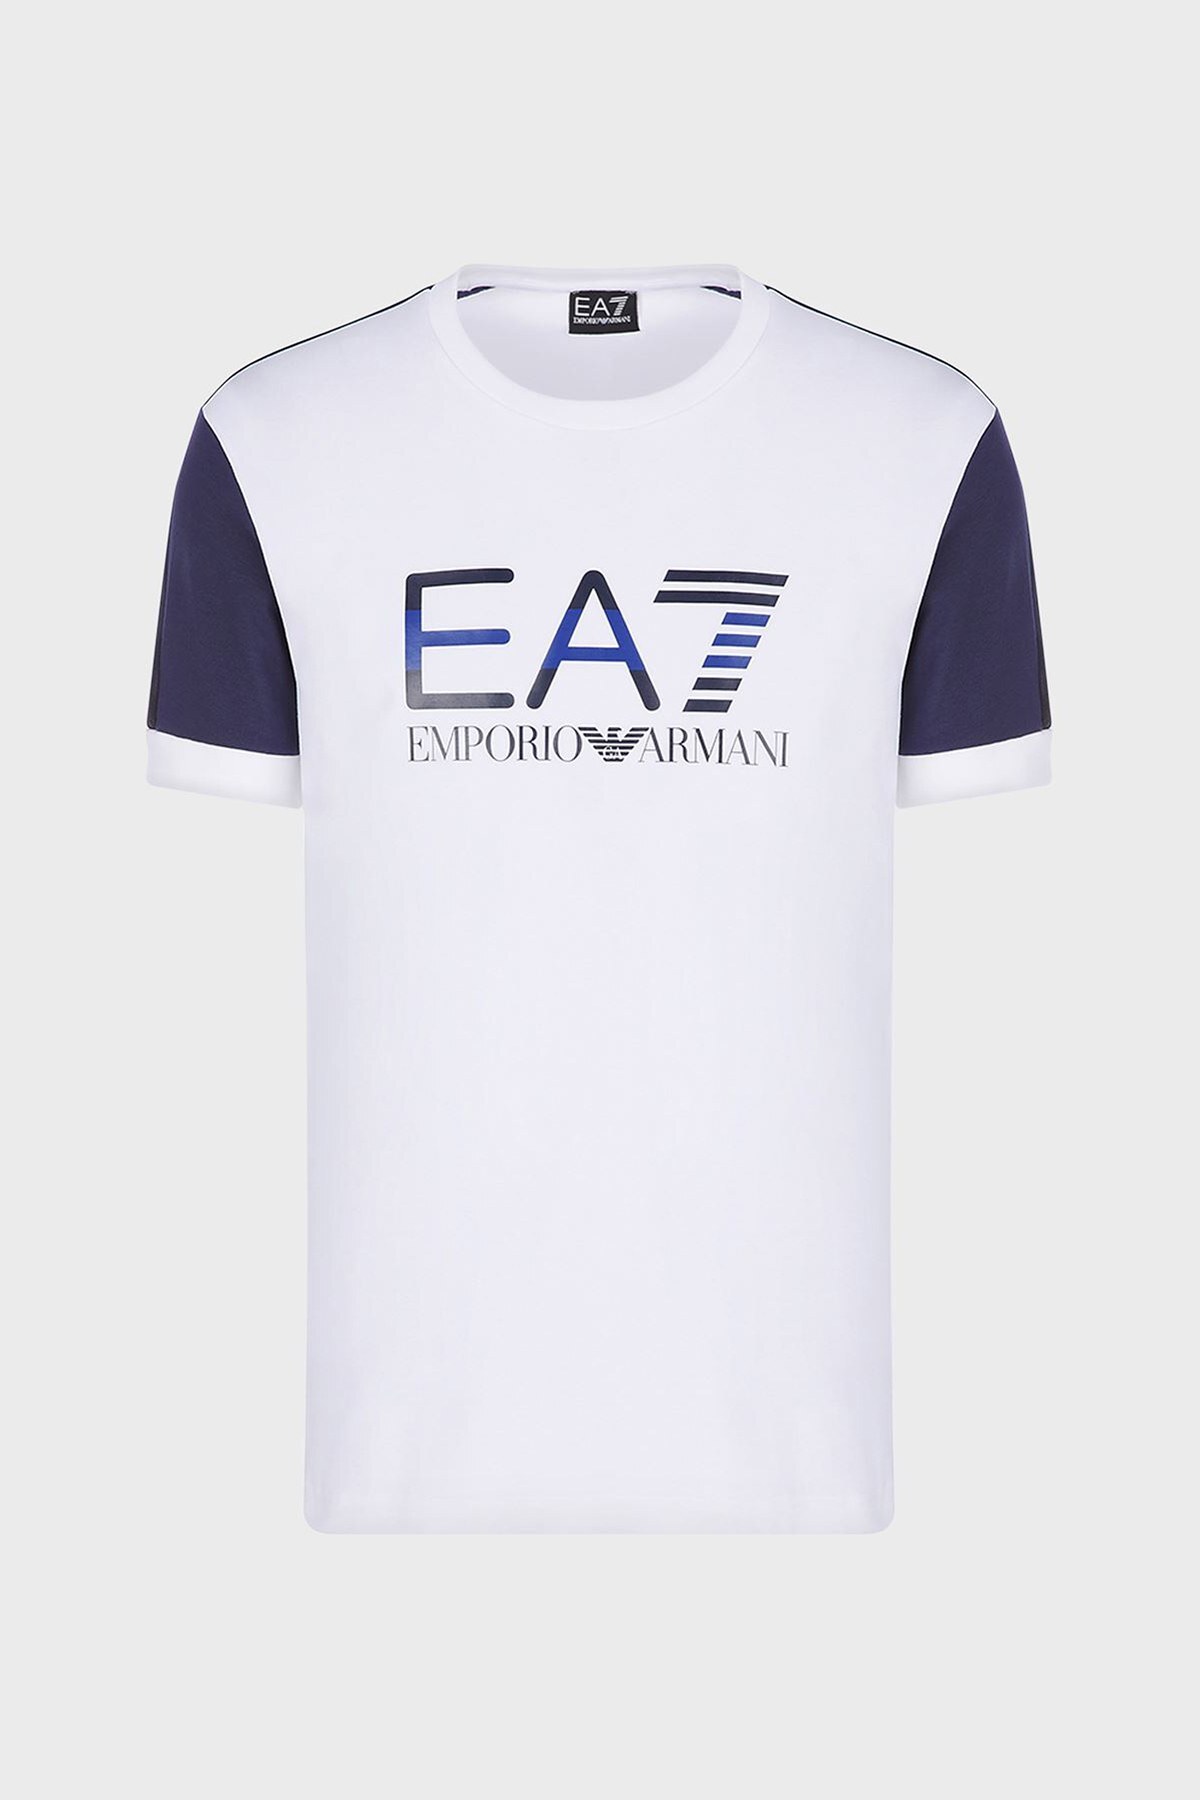 EA7 Logo Baskılı Bisiklet Yaka Pamuklu Erkek T Shirt S 3KPT68 PJ5MZ 1100 BEYAZ